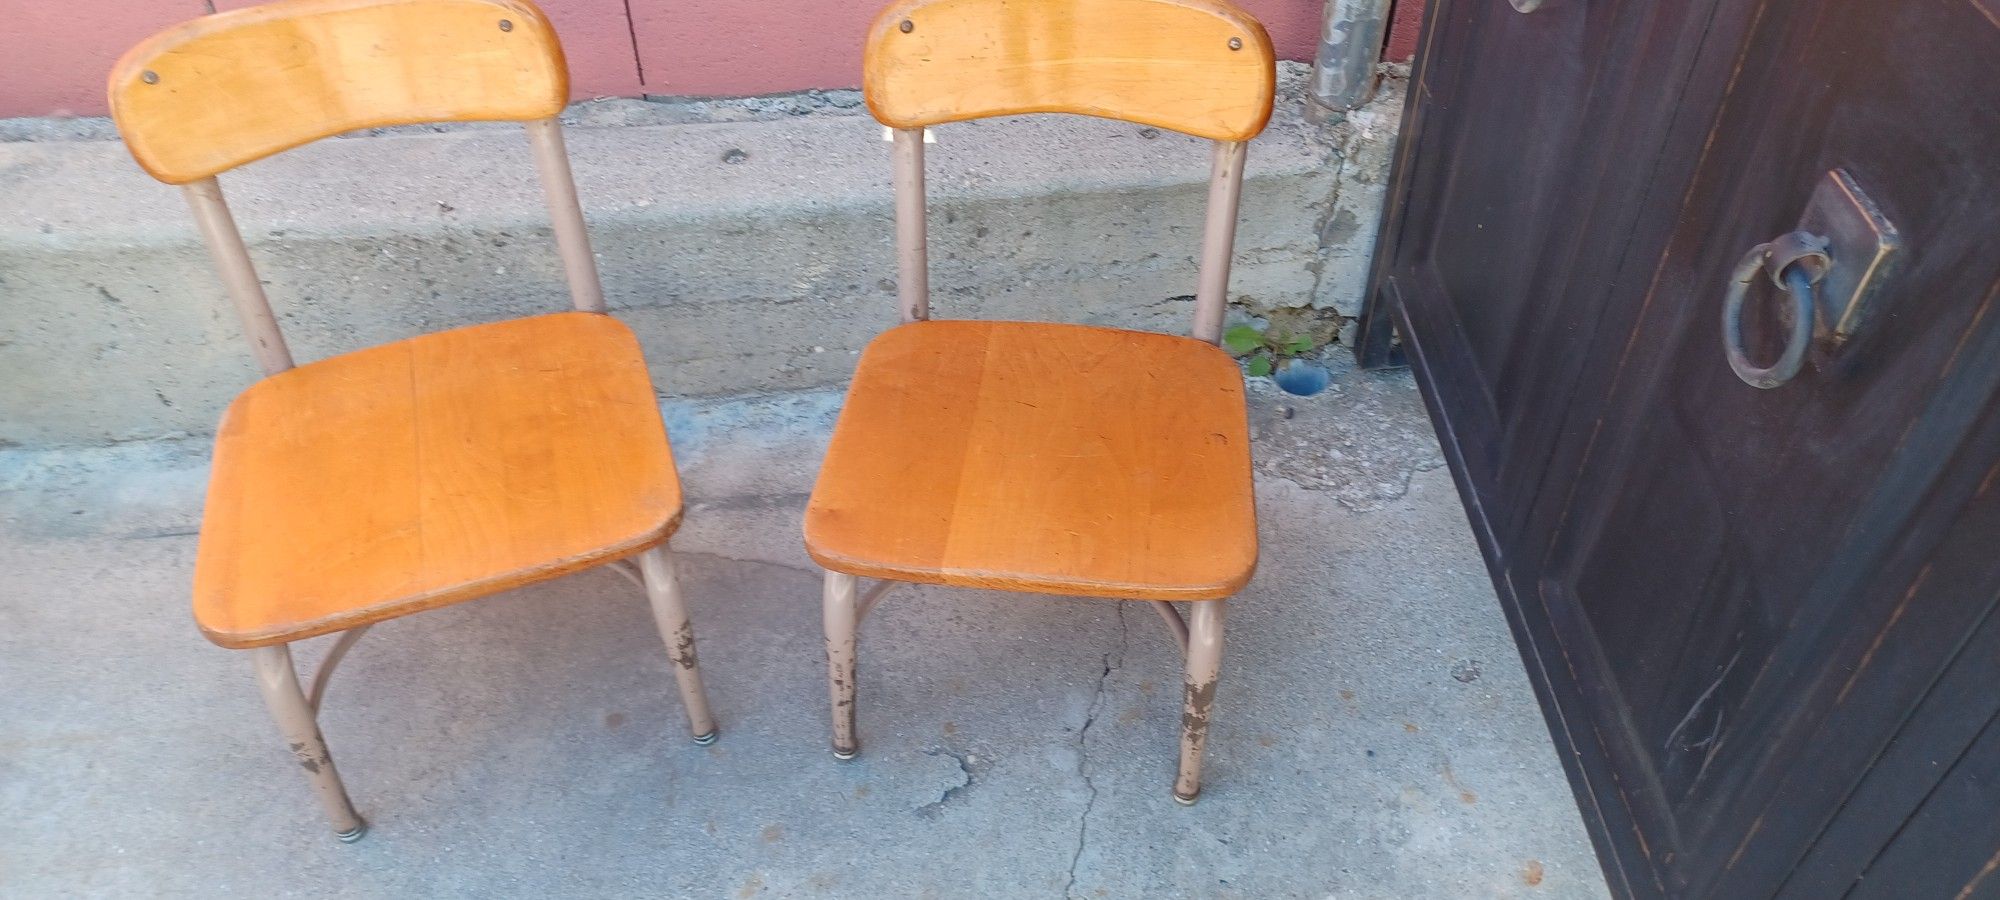 1950's Vintage Metal Soild Wood Chairs